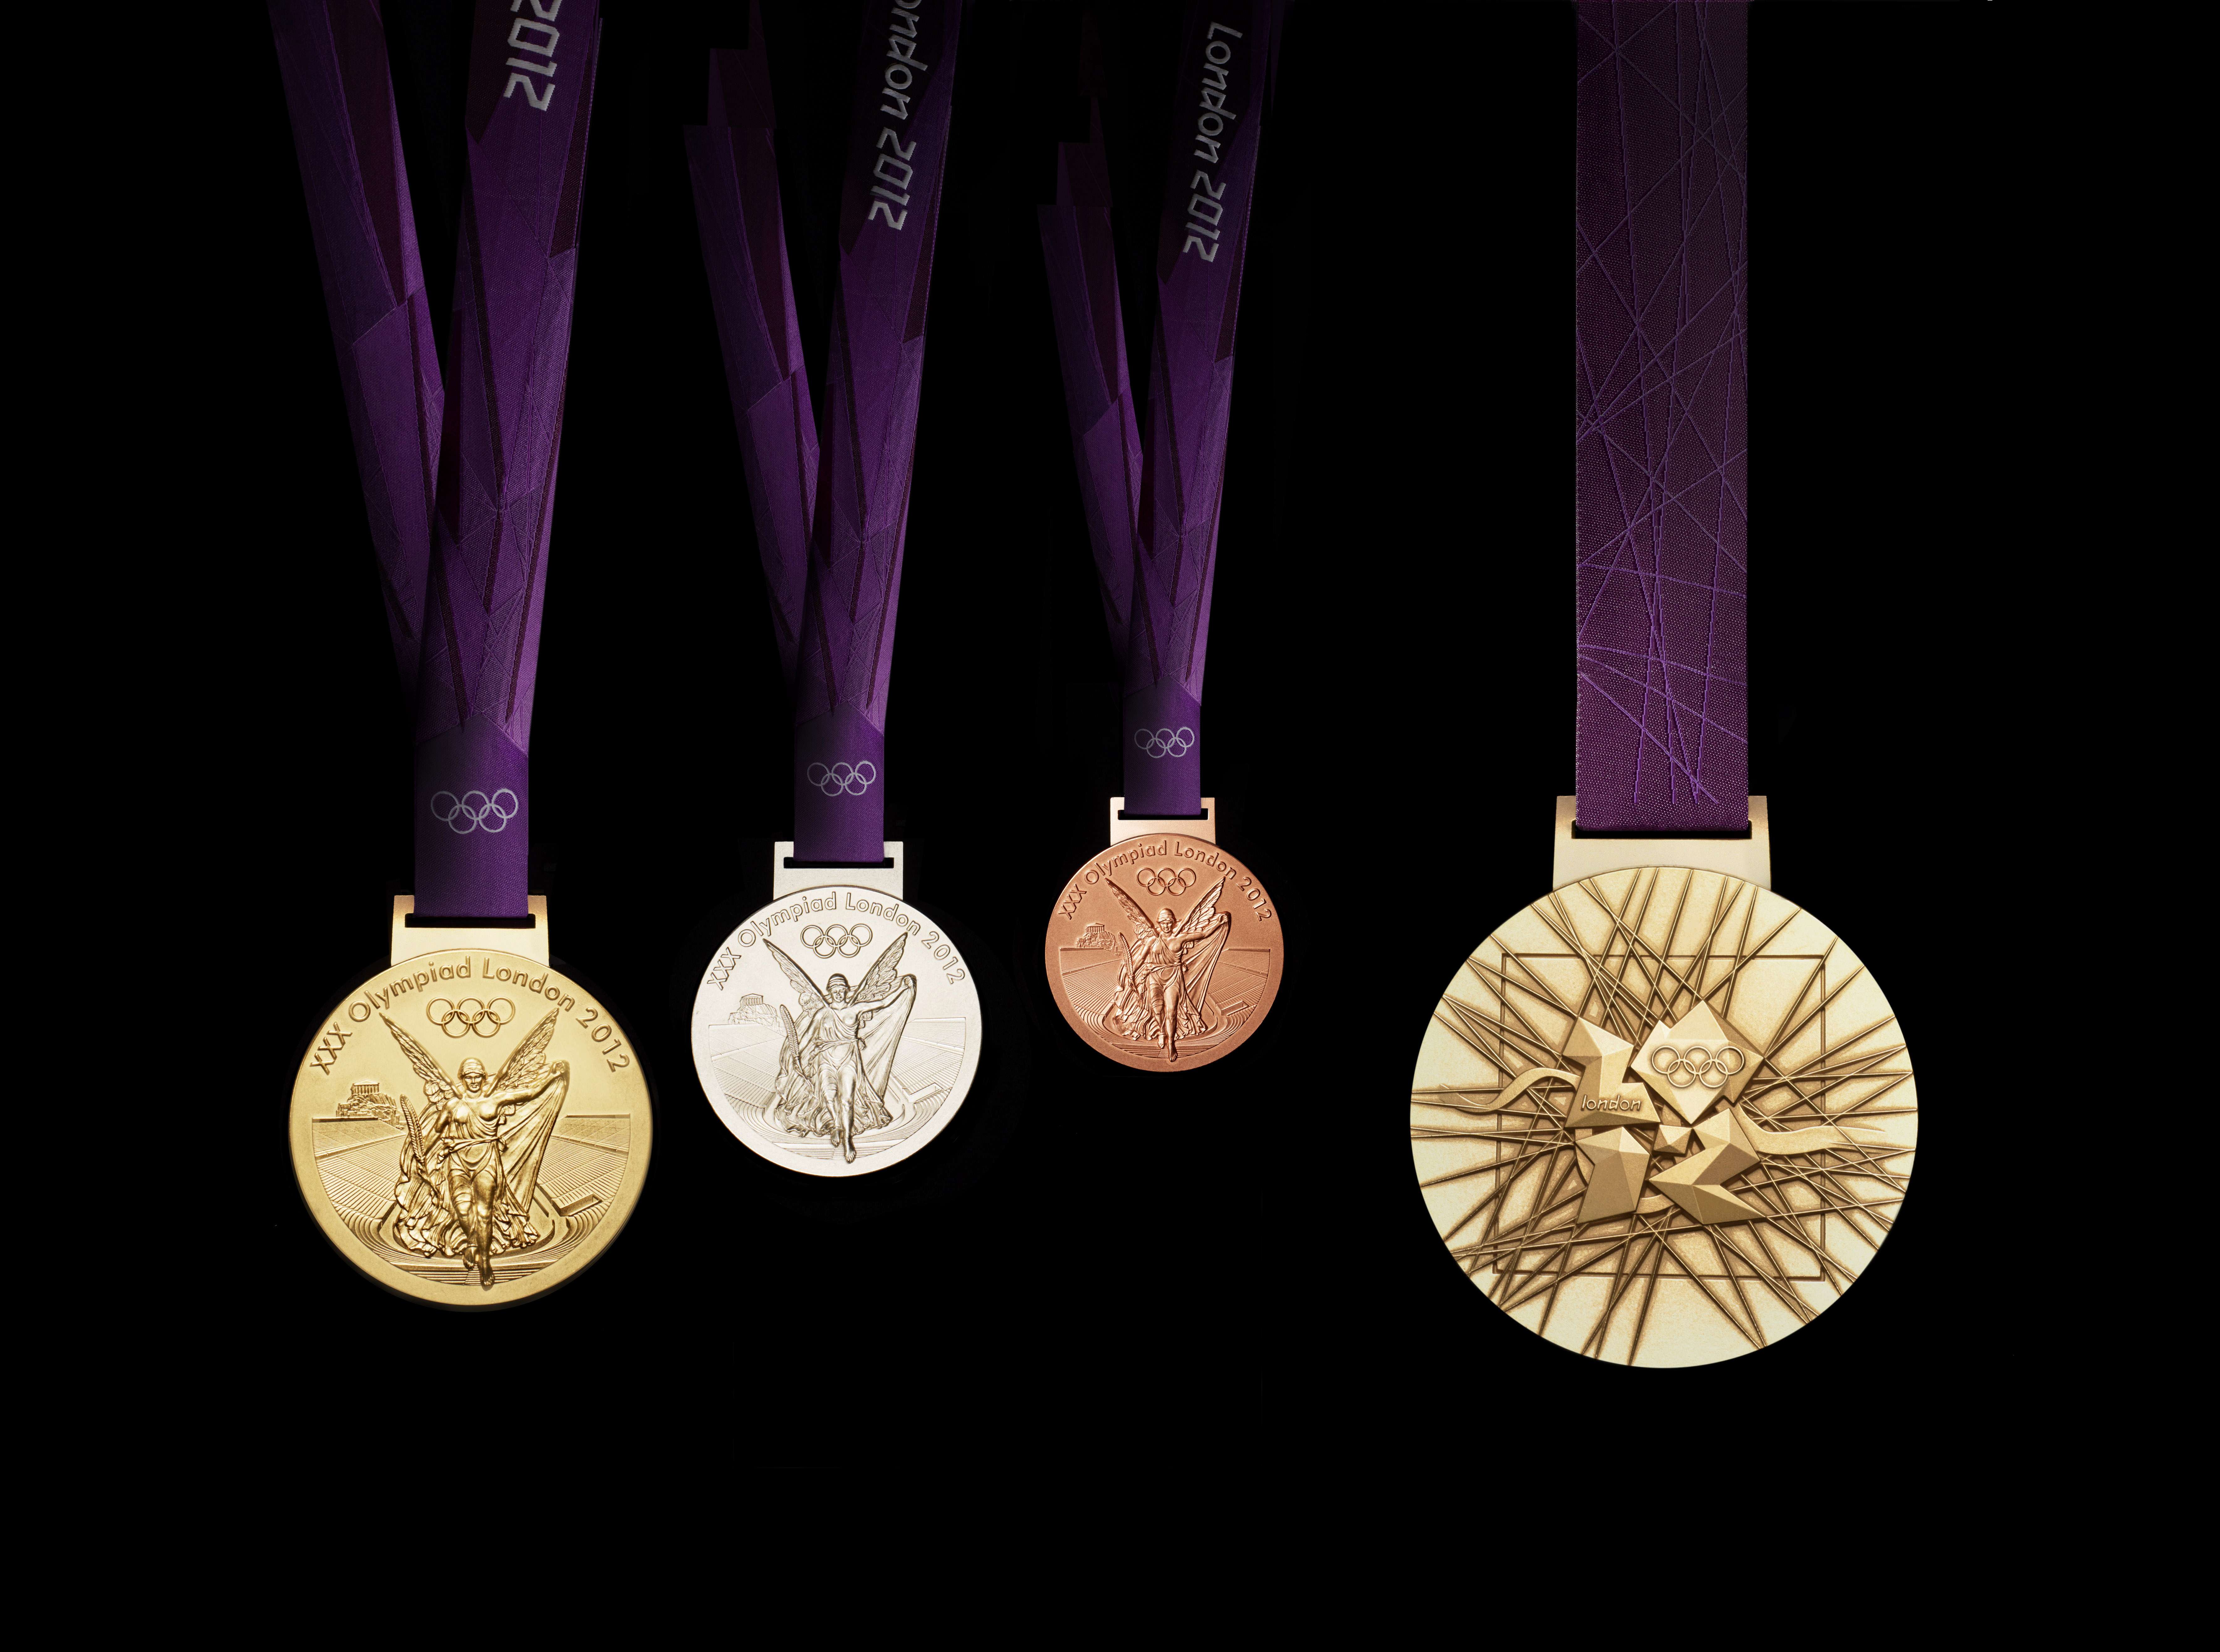 The most medals. Олимпийская медаль Лондон 2012. Олимпийские игры 2012 Лондон медали. Медали Олимпийских игр 2012. Медали дизайнерские.